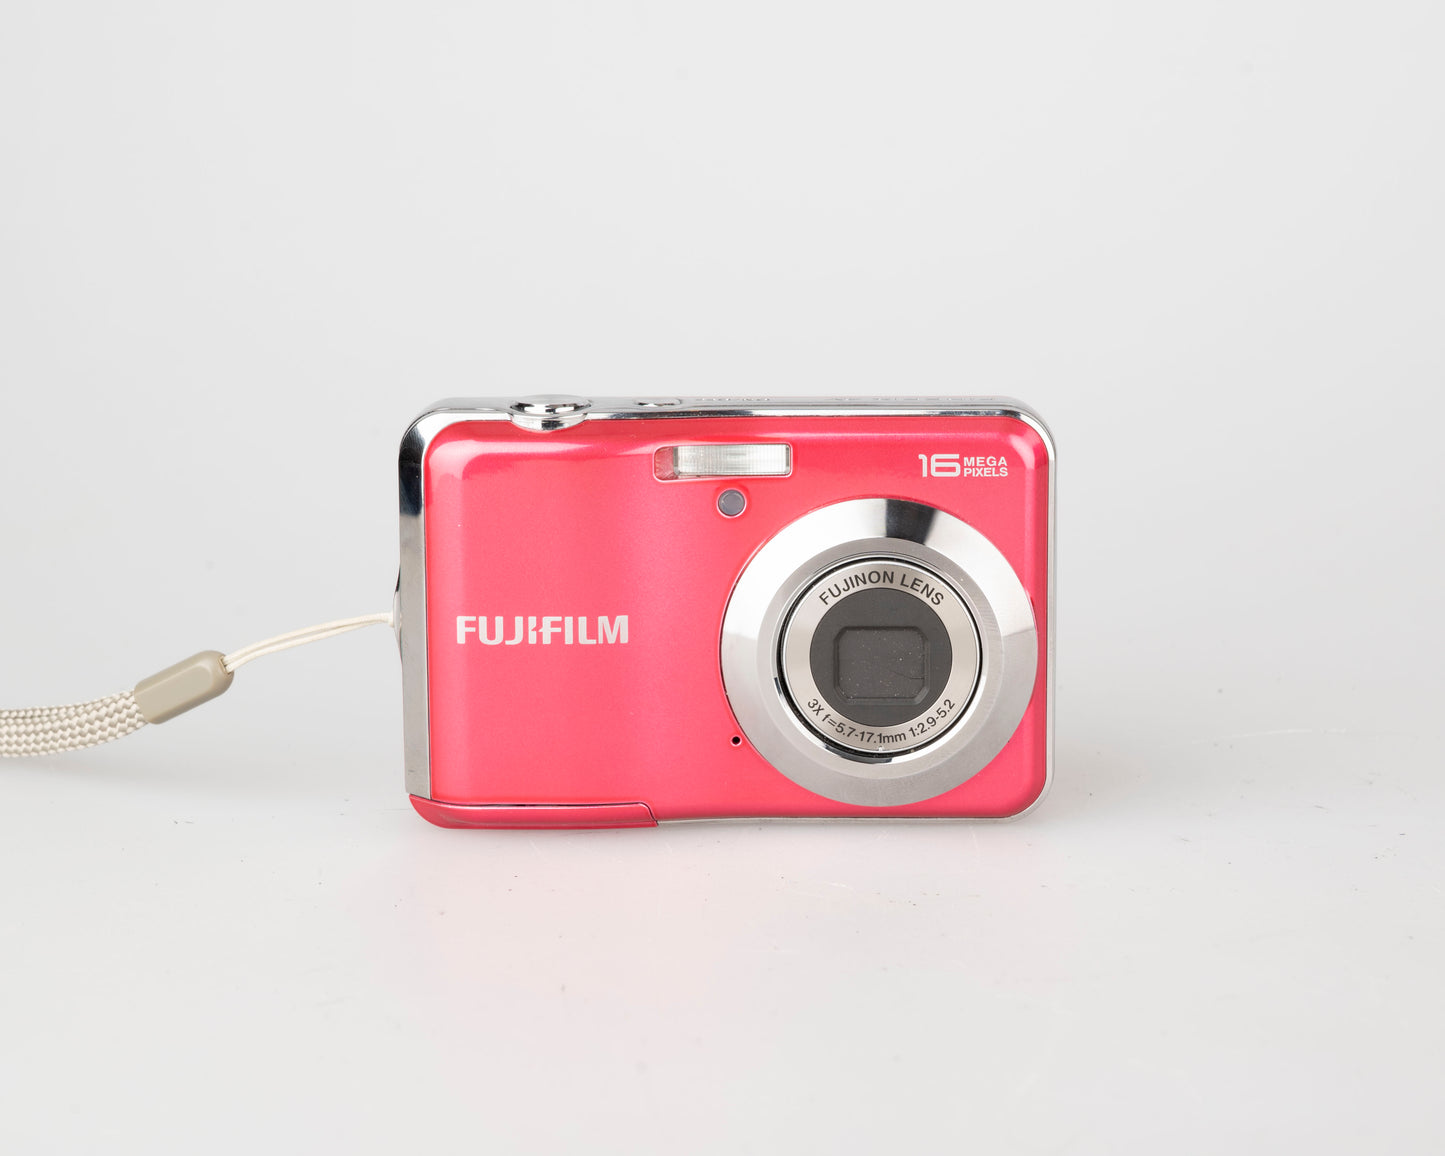 Fujifilm Finepix AV250 digicam w/ 16 MP CCD sensor + 2GB SD card (uses AA batteries)